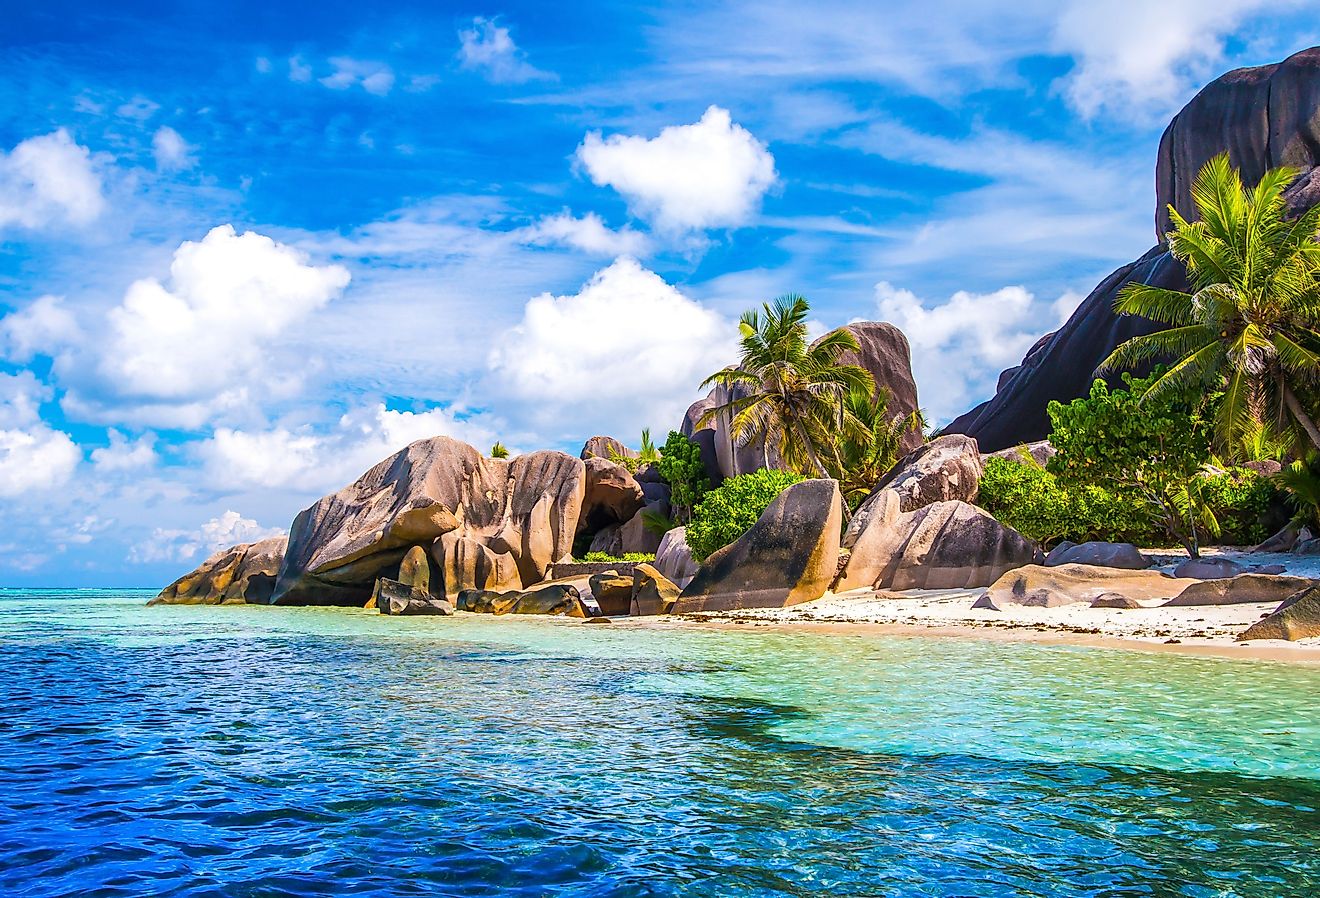 Source d'Argent at La Digue Island, Seychelles. Image credit: Zoltan.Benyei via Shutterstock